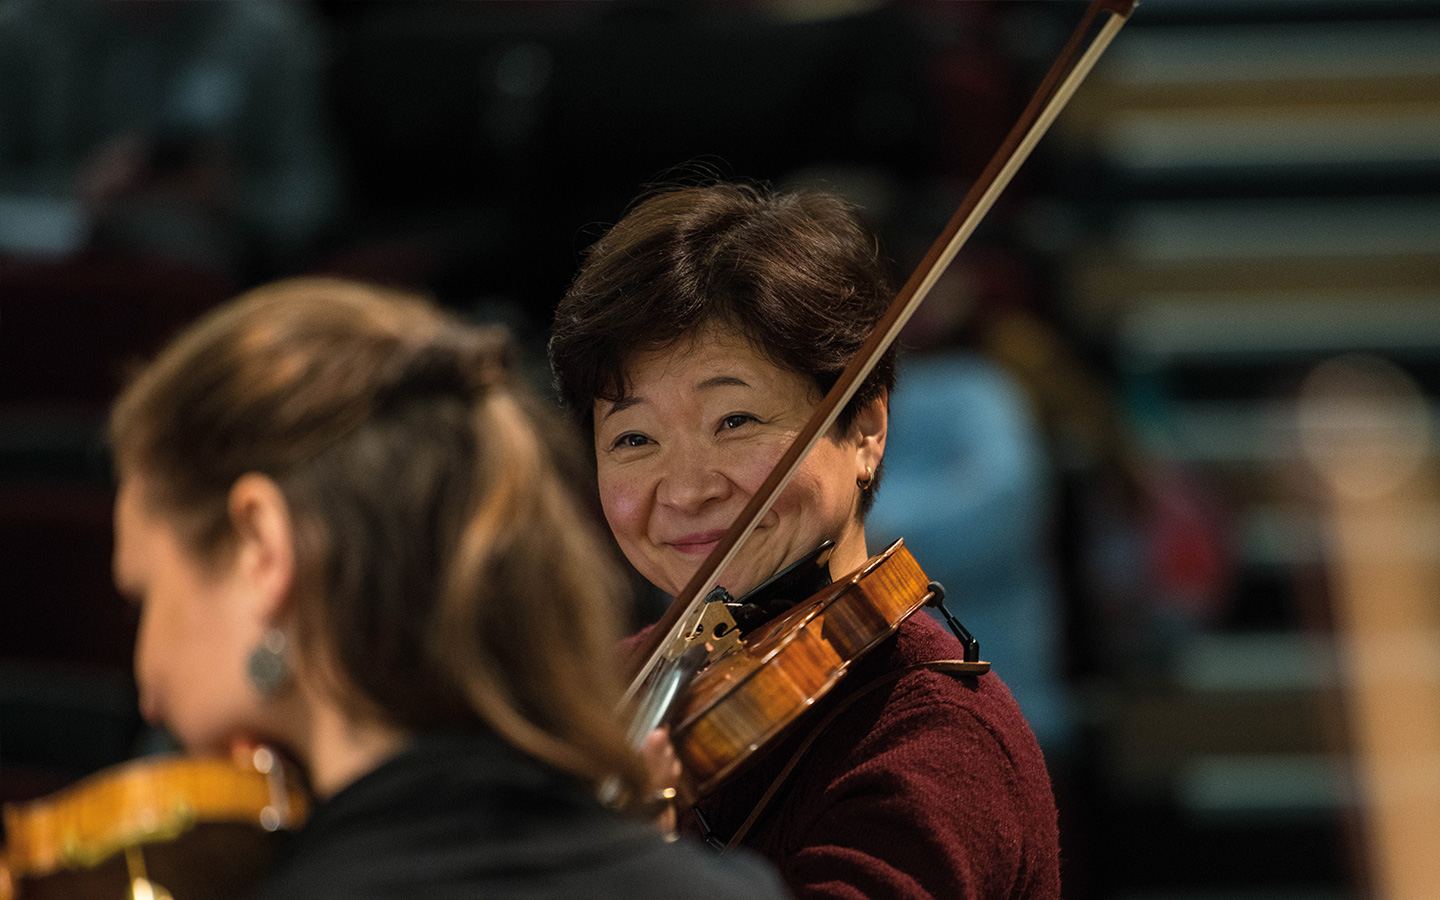 ACO Violinist Aiko Goto smiling